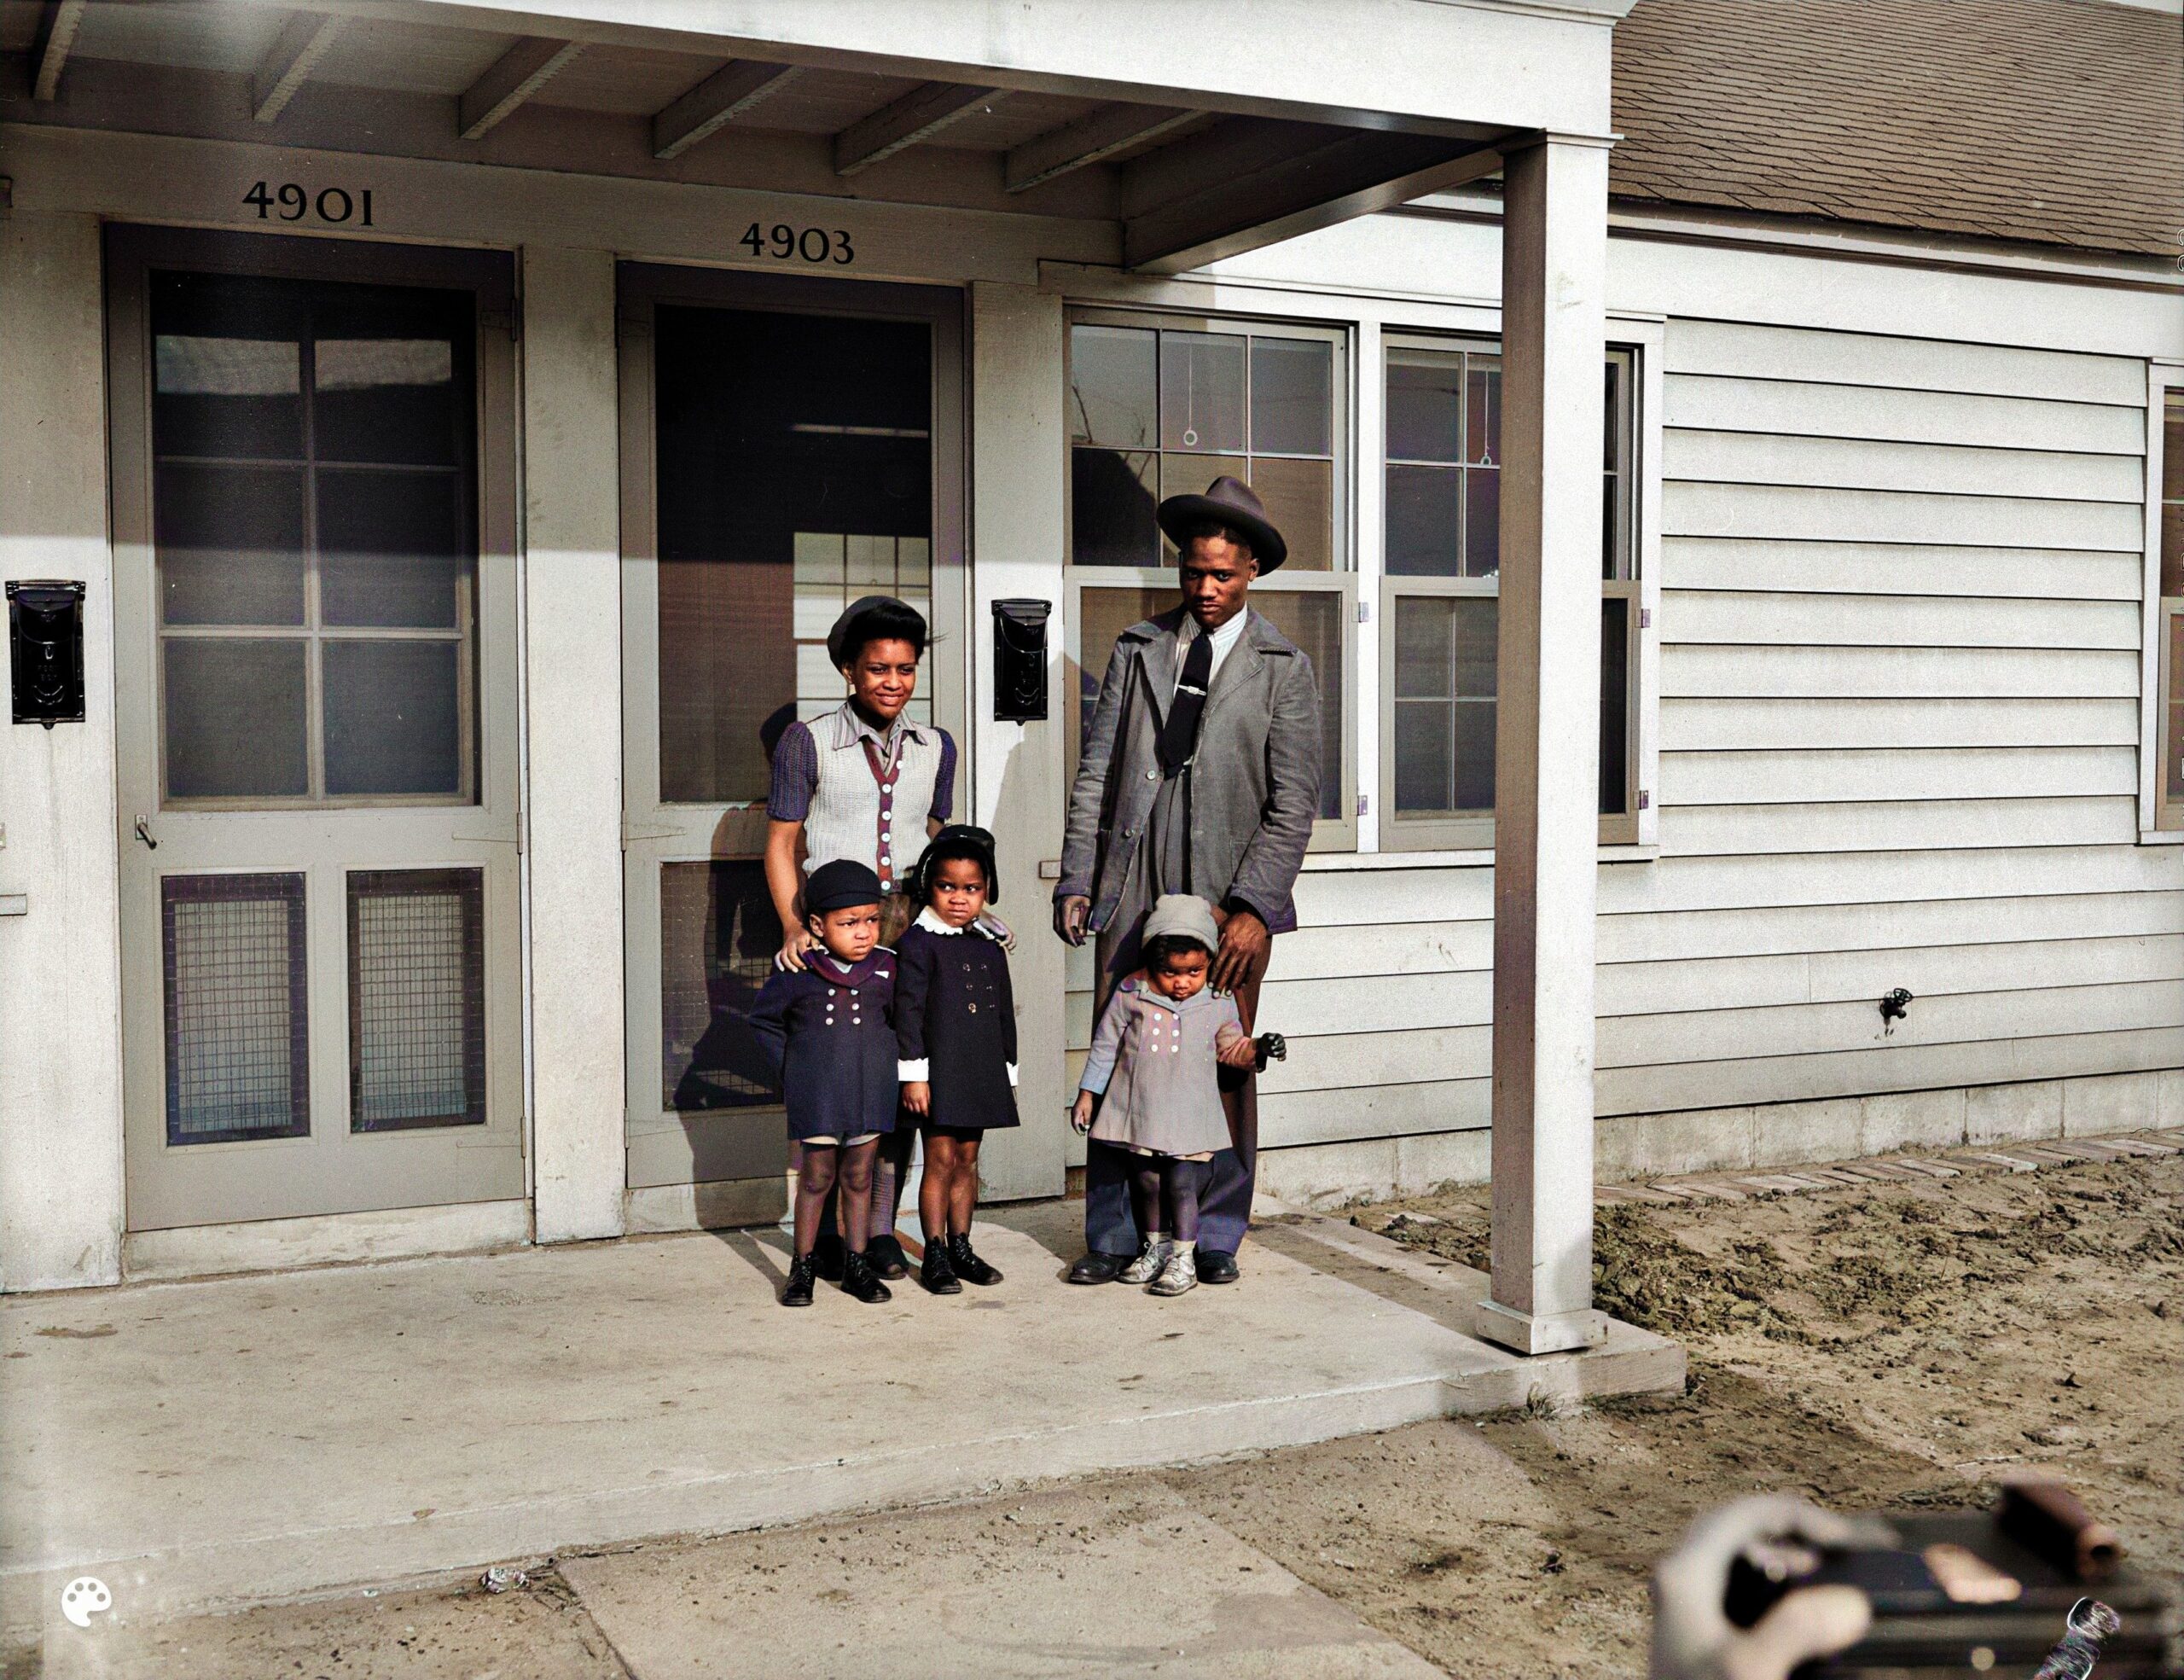 Family photo, Detroit, Michigan, 1942 (Credit: Arthur S. Siegel)